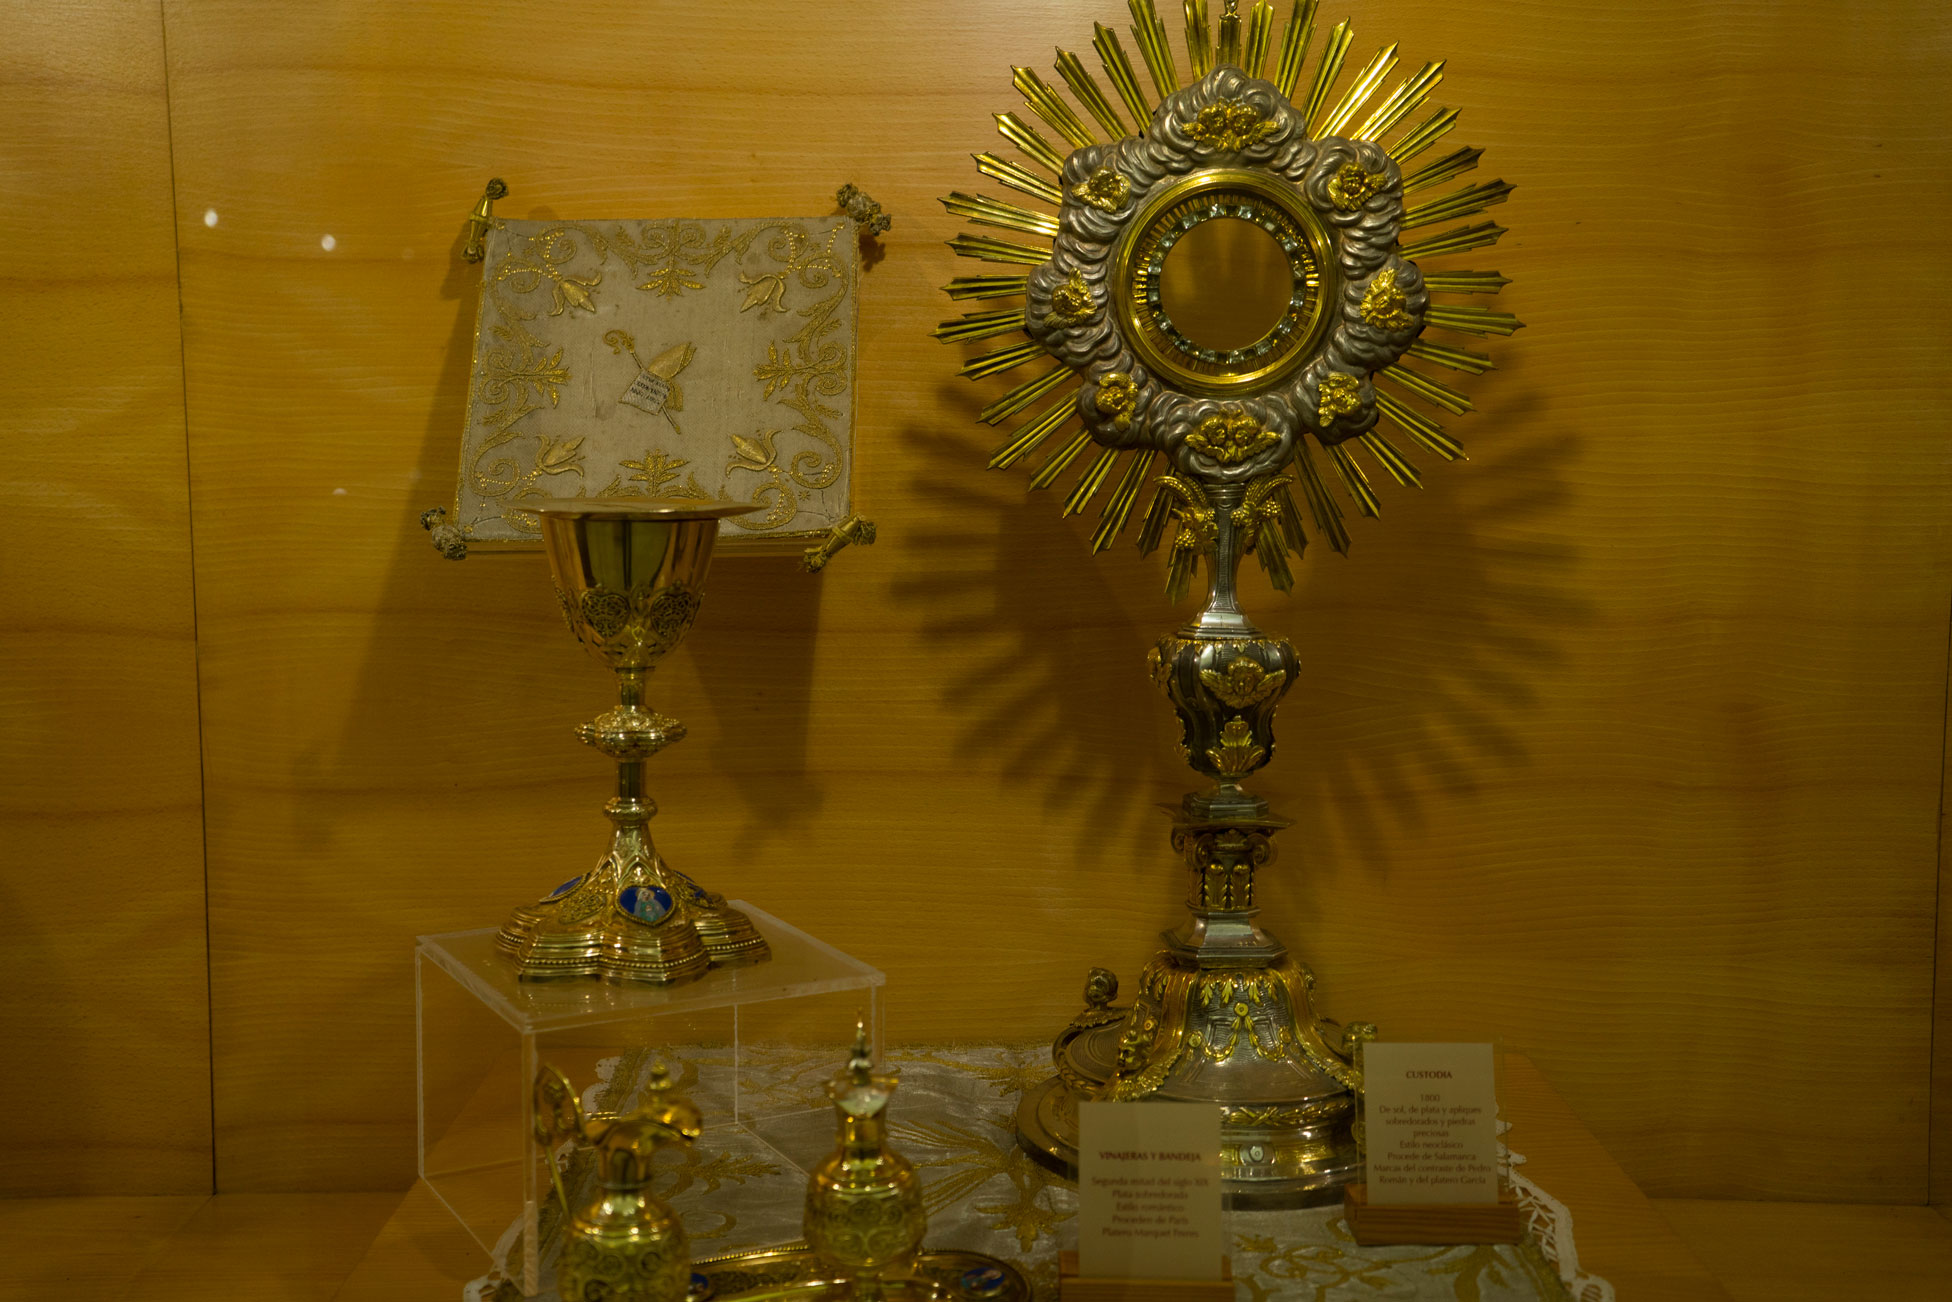 Objects of liturgical art